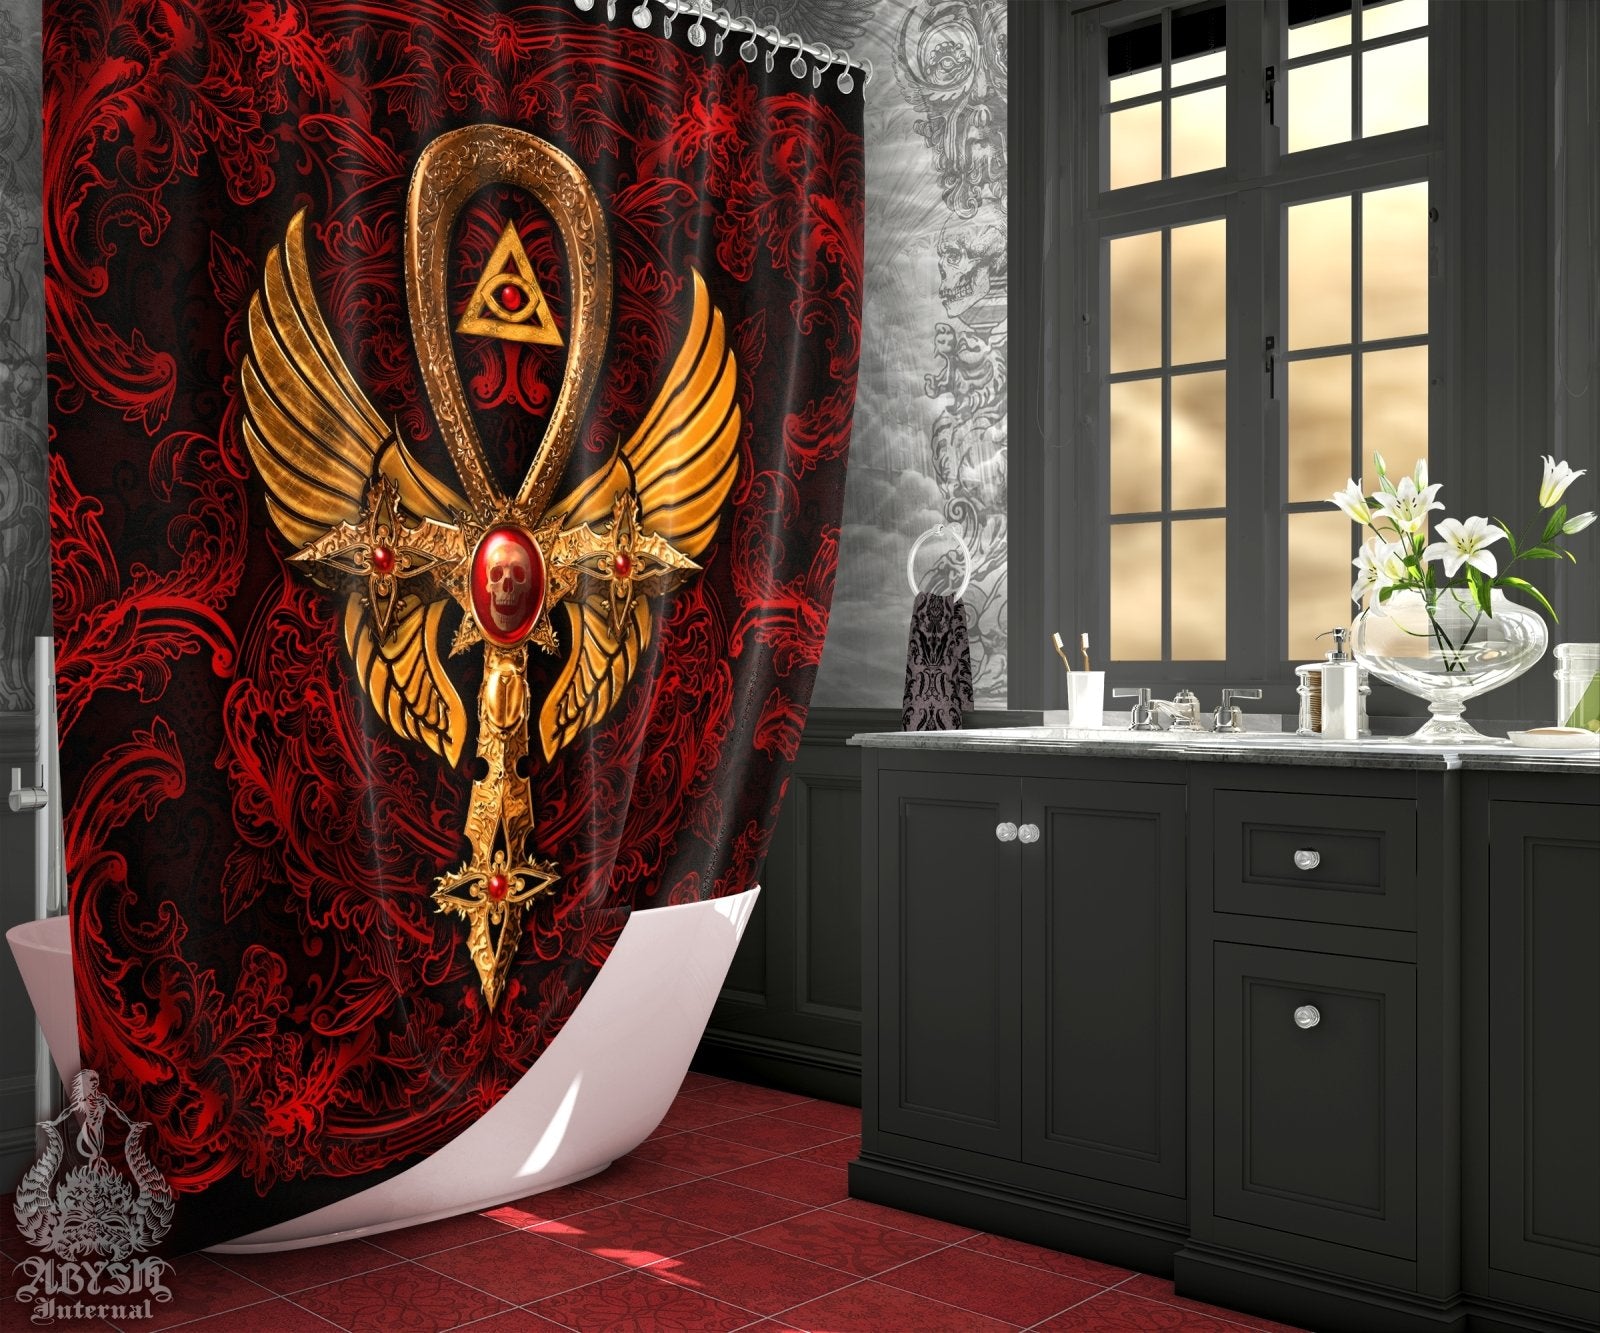 Gothic Shower Curtain, Goth Ankh Cross, Dark Bathroom Decor, Occult - Red & Gold - Abysm Internal